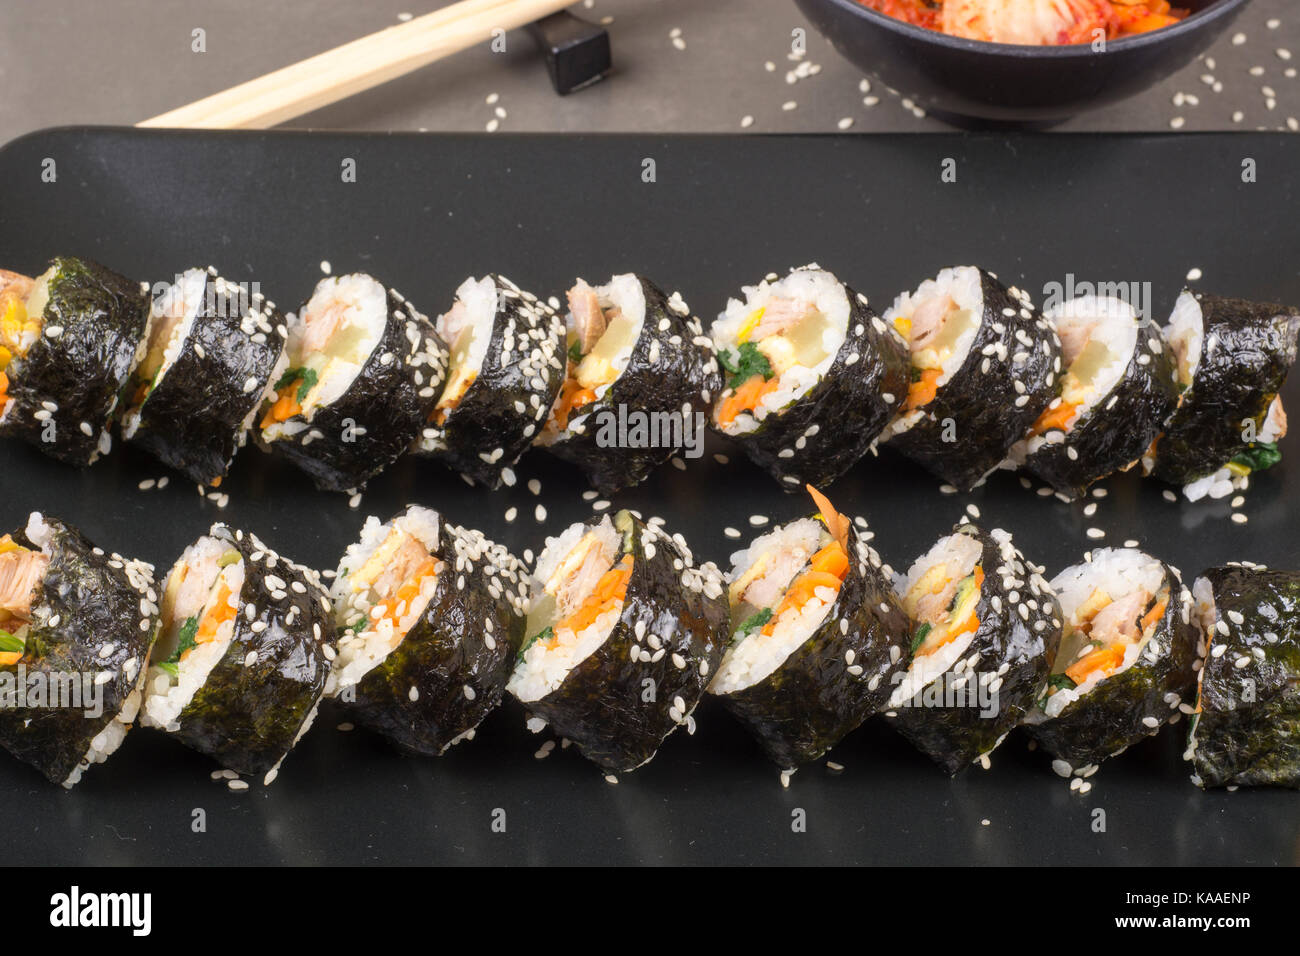 https://c8.alamy.com/comp/KAAENP/kimbap-or-gimbap-with-tuna-korean-food-KAAENP.jpg